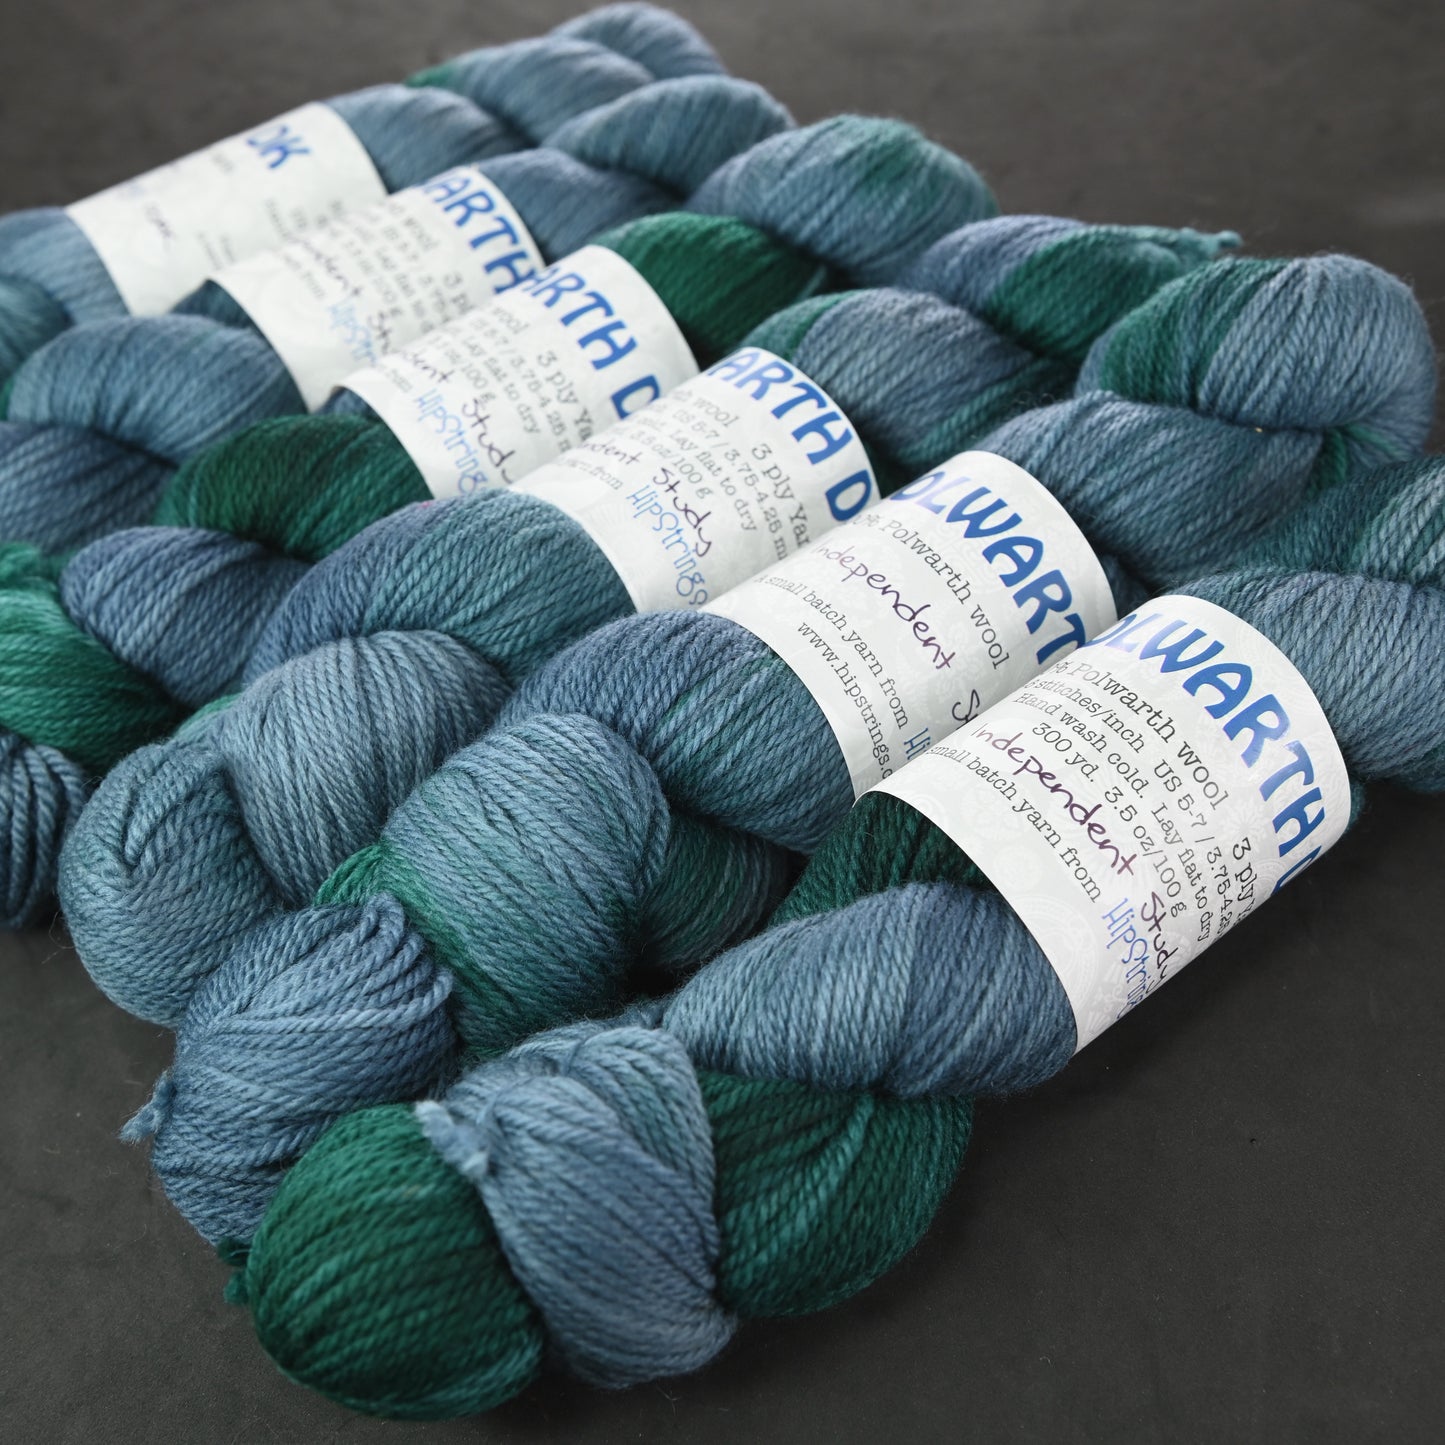 Independent Study Blue Green on Polwarth Wool DK yarn